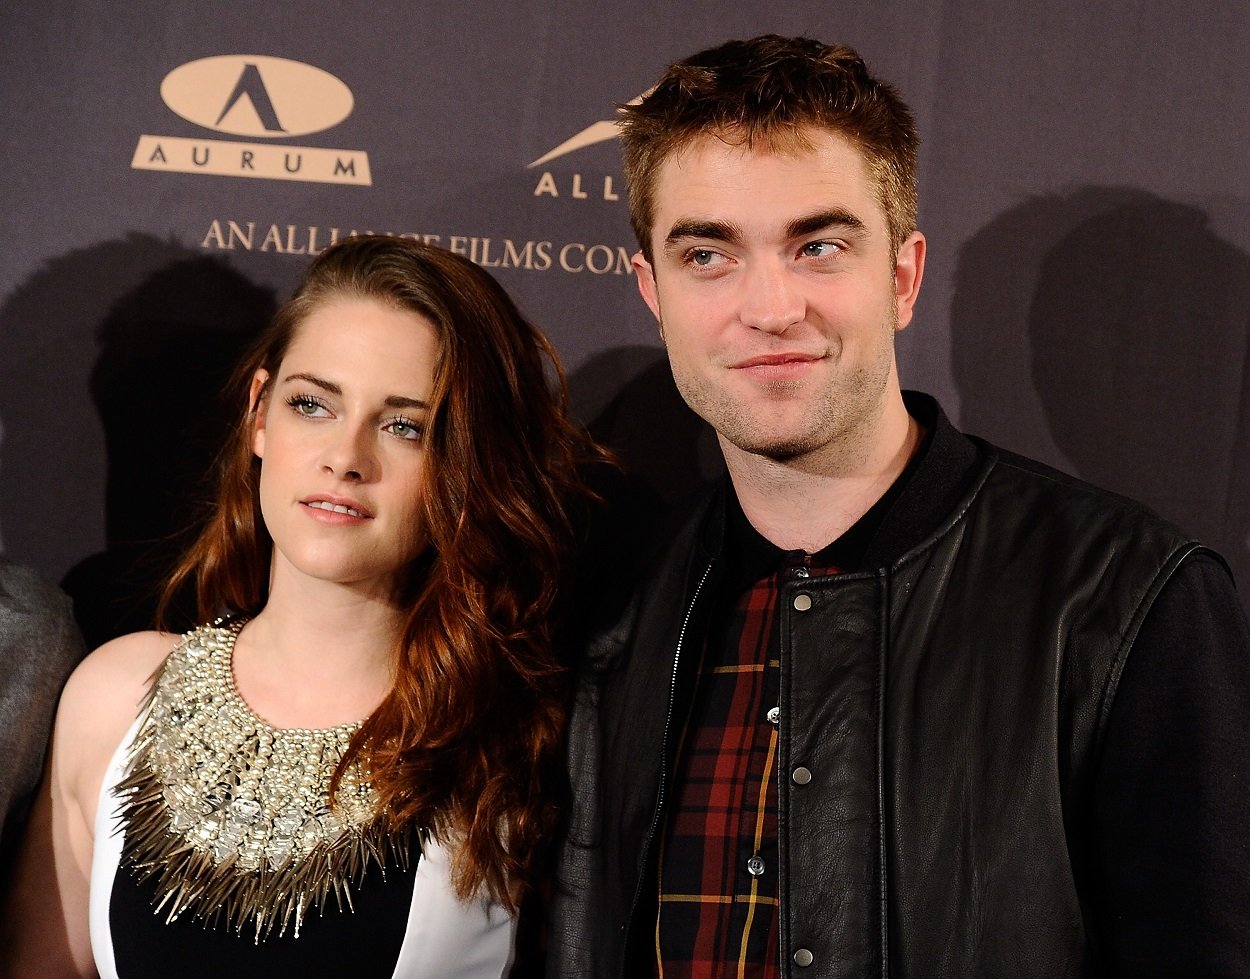 Twilight stars Kristen Stewart and Robert Pattinson